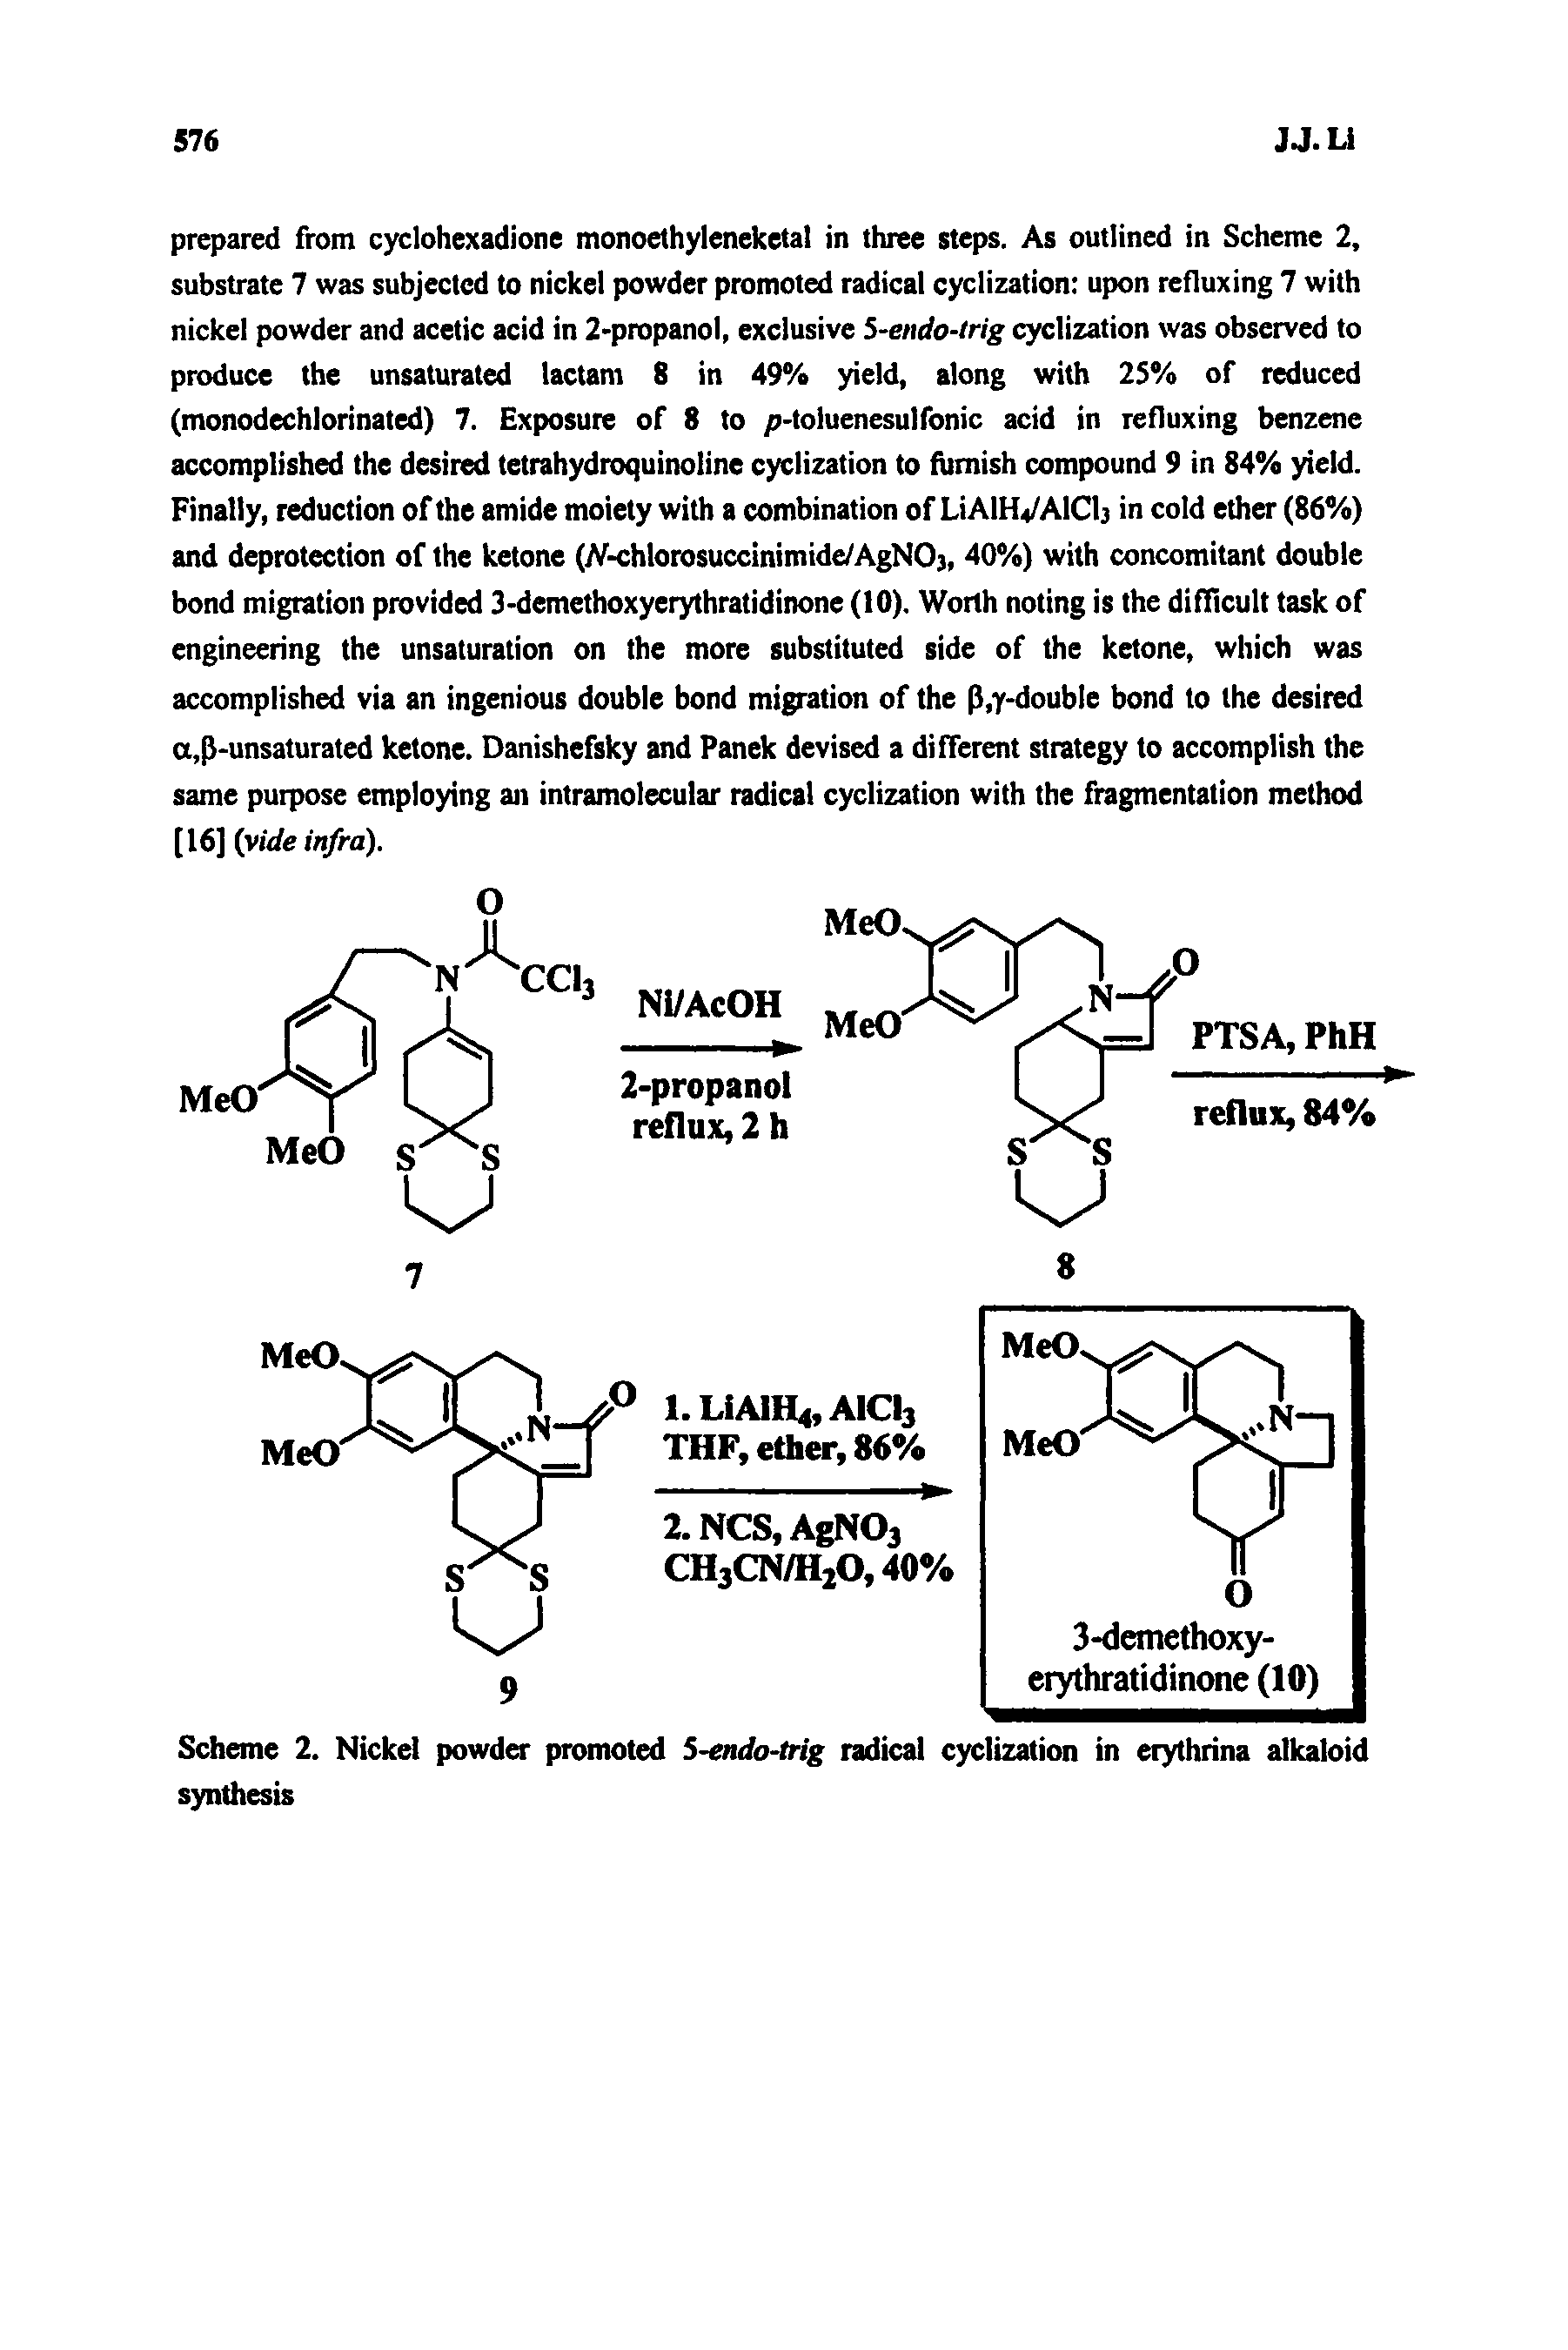 Scheme 2. Nickel powder promoted 5-endo-trig radical cyclization in erythrina alkaloid synthesis...